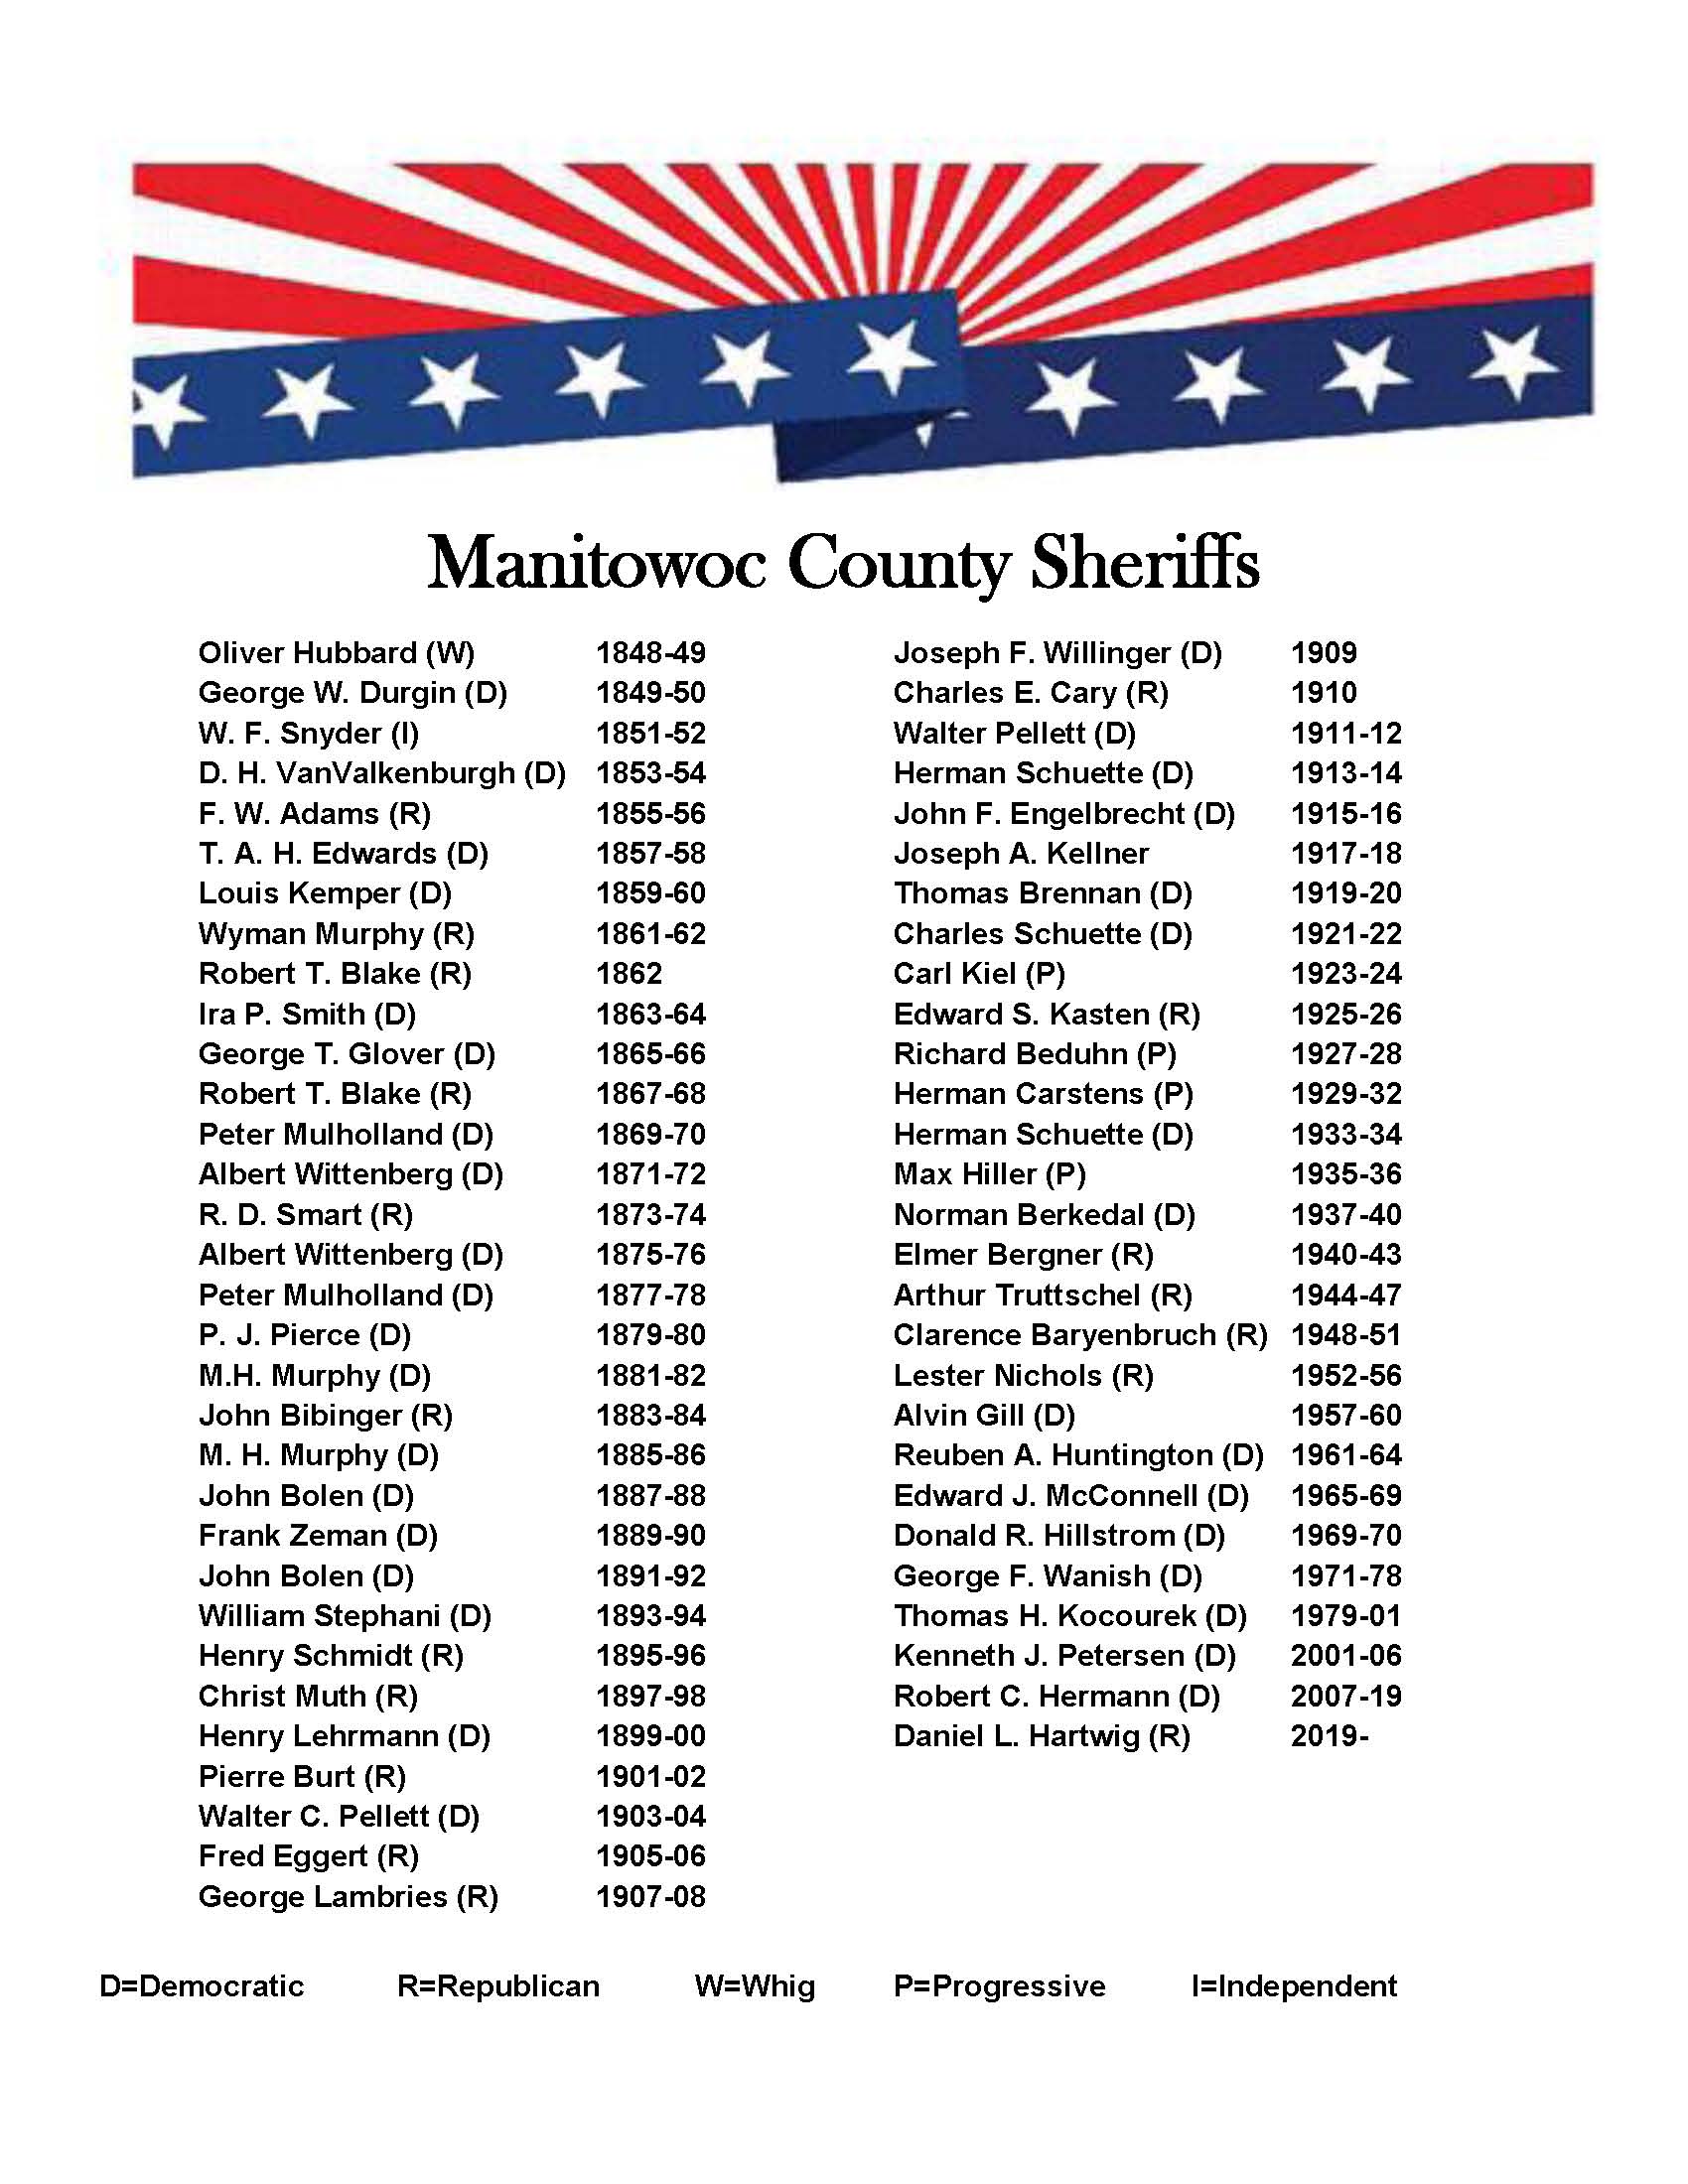 List of Manitowoc County Sheriffs